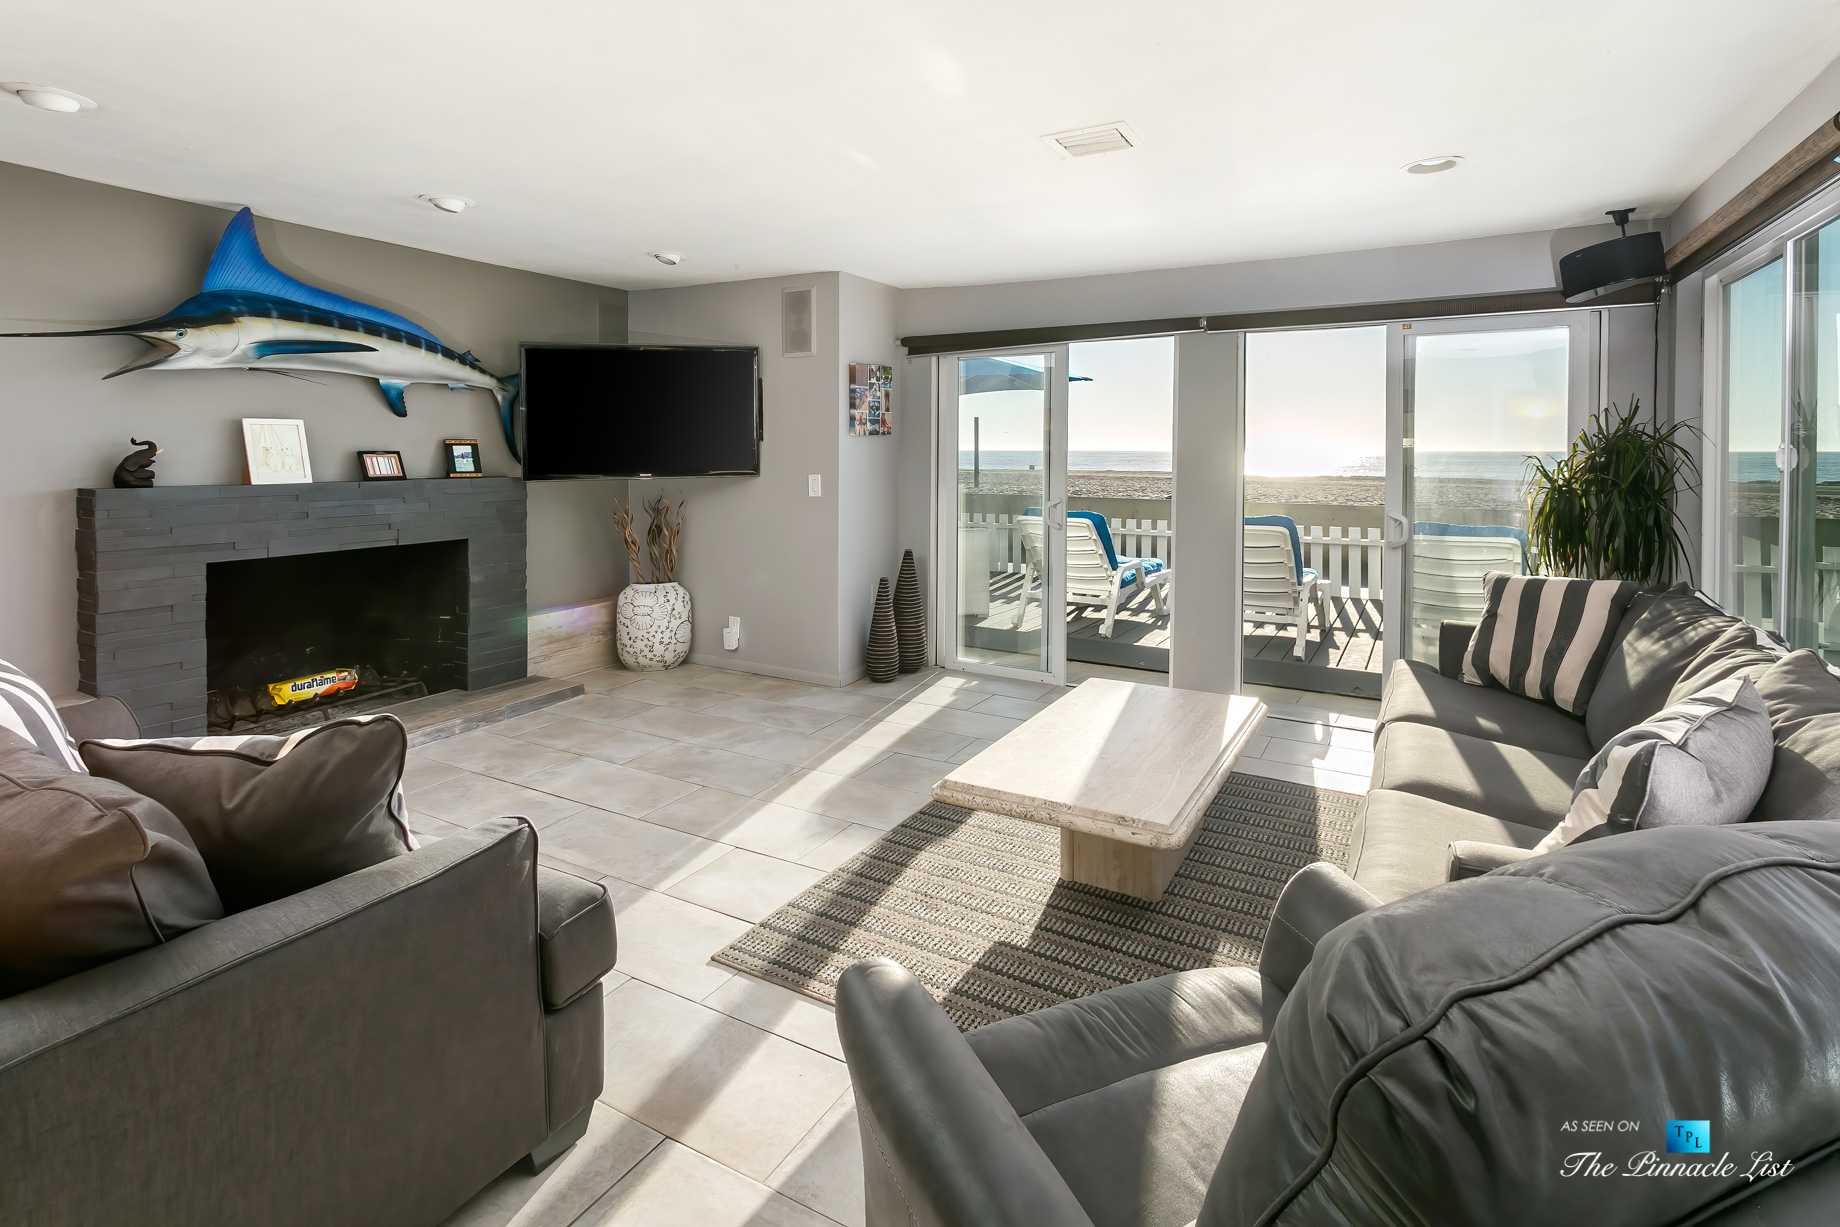 3500 The Strand, Hermosa Beach, CA, USA – Living Room – Luxury Real Estate – Original 90210 Beach House – Oceanfront Home